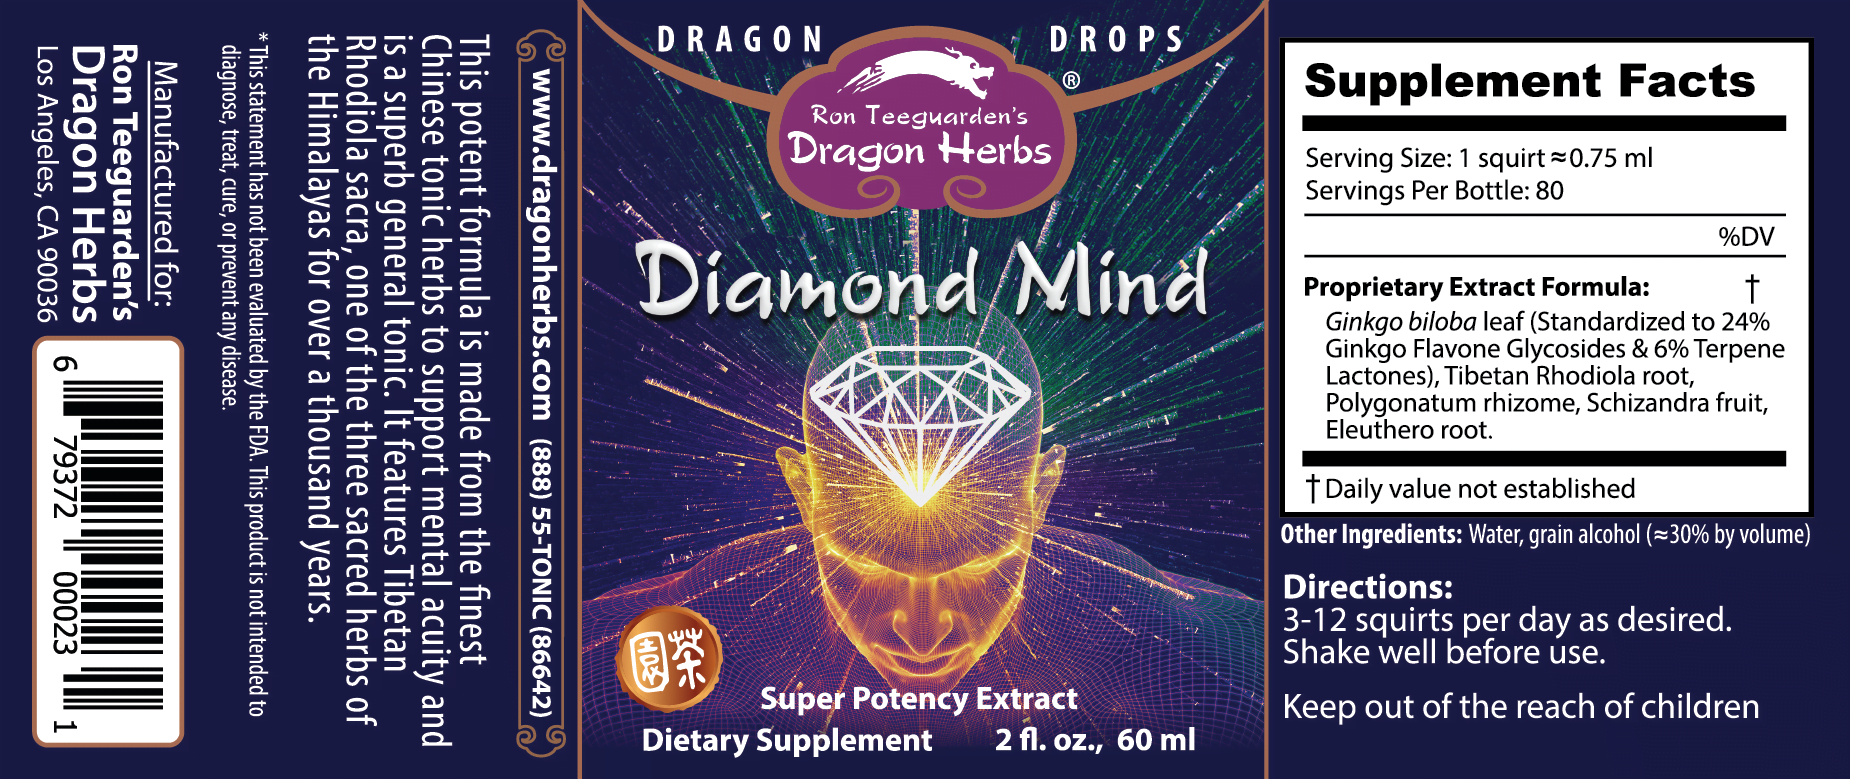 Diamond Mind Drops Label